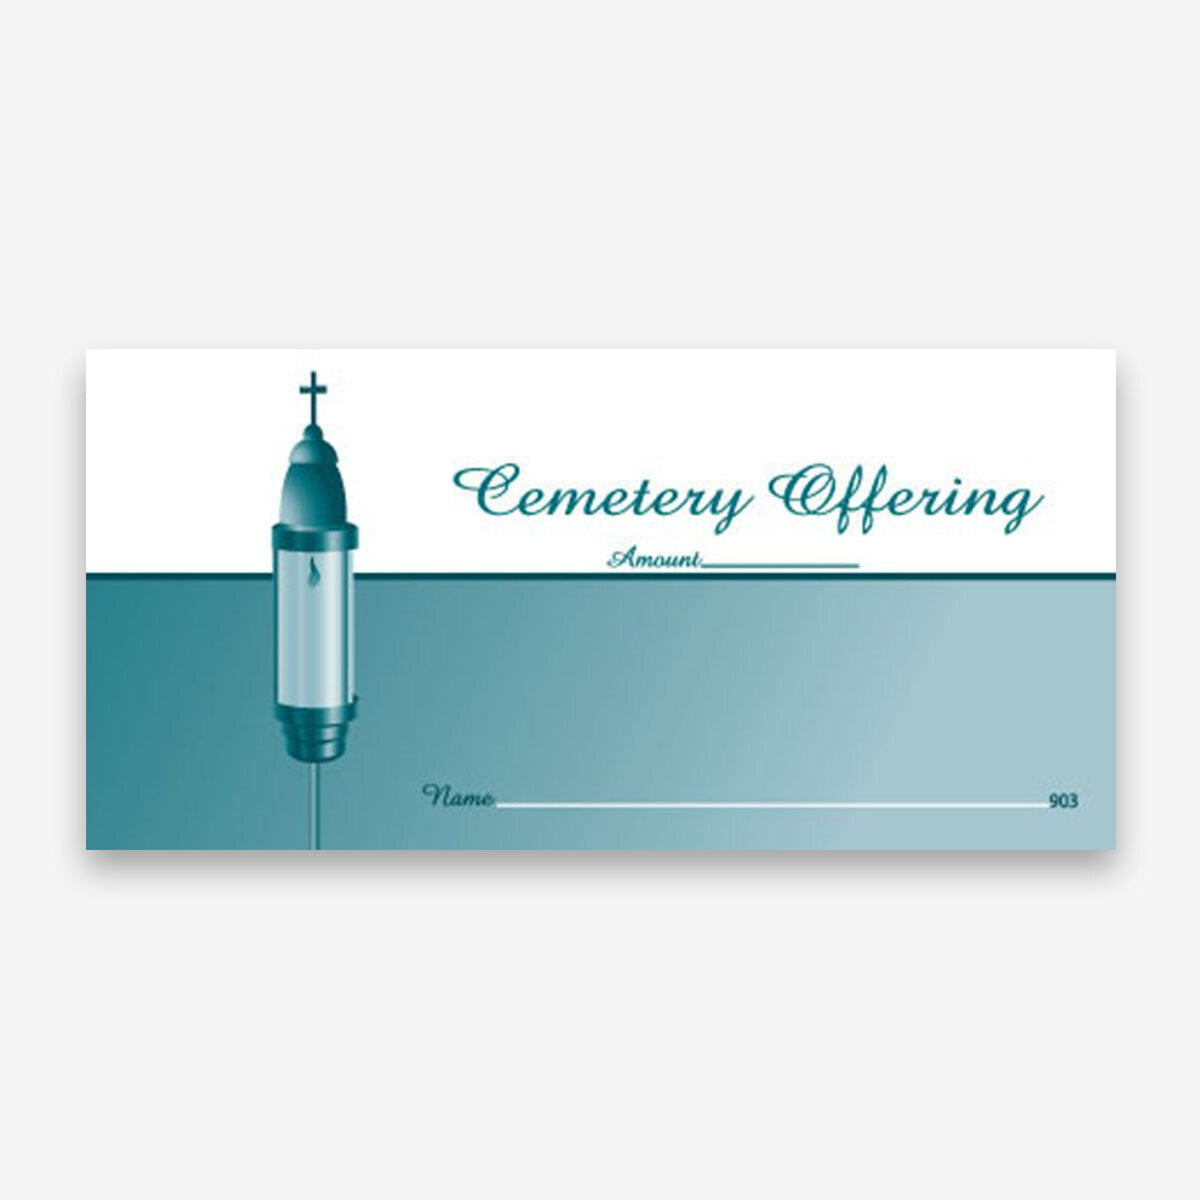 Cemetery Offering Envelope